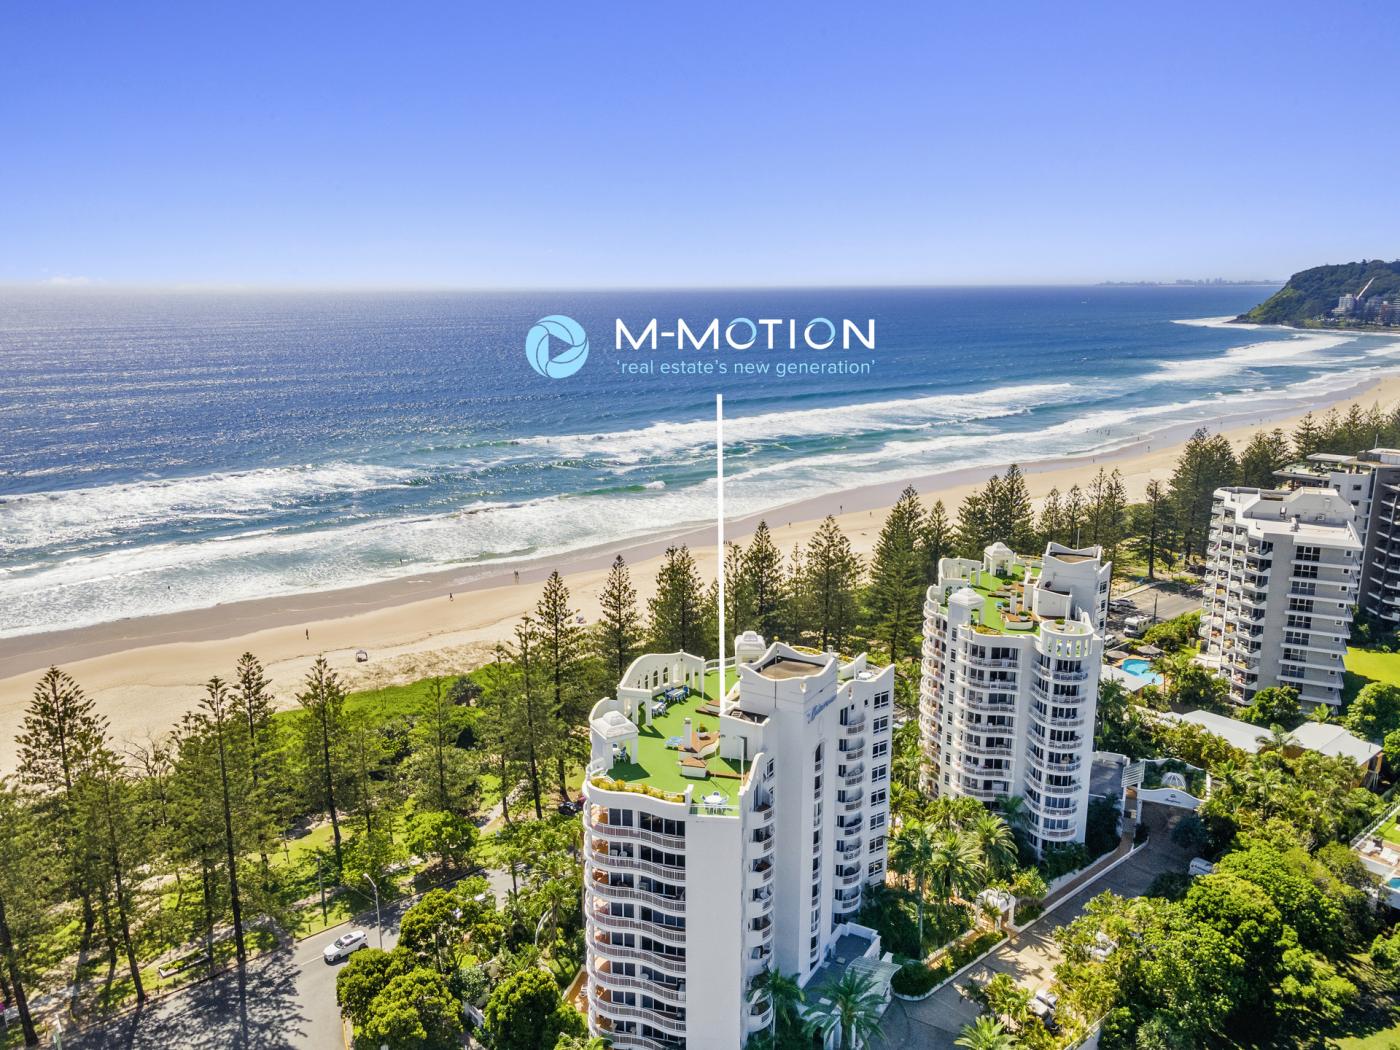 M-Motion Real Estate Agency, 2305_220 The Esplanade, Burleigh Heads Gold Coast, Michael Mahon Lauren Mahon Best Real Estate Agent